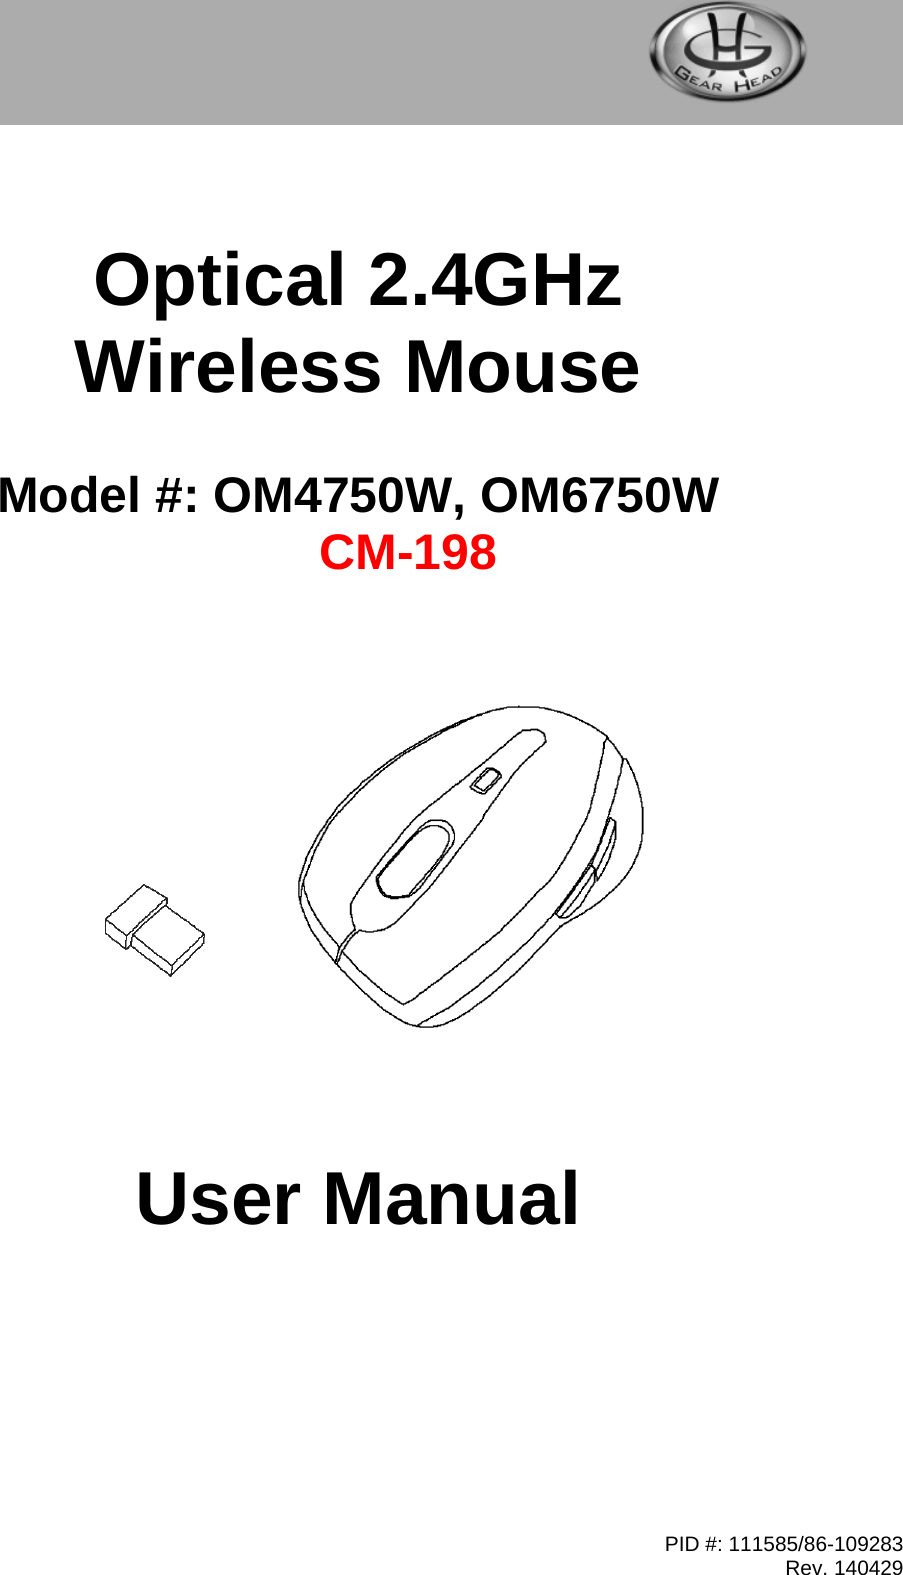 PID #: 111585/86-109283 Rev. 140429           Optical 2.4GHz Wireless Mouse   Model #: OM4750W, OM6750W  CM-198               User Manual         